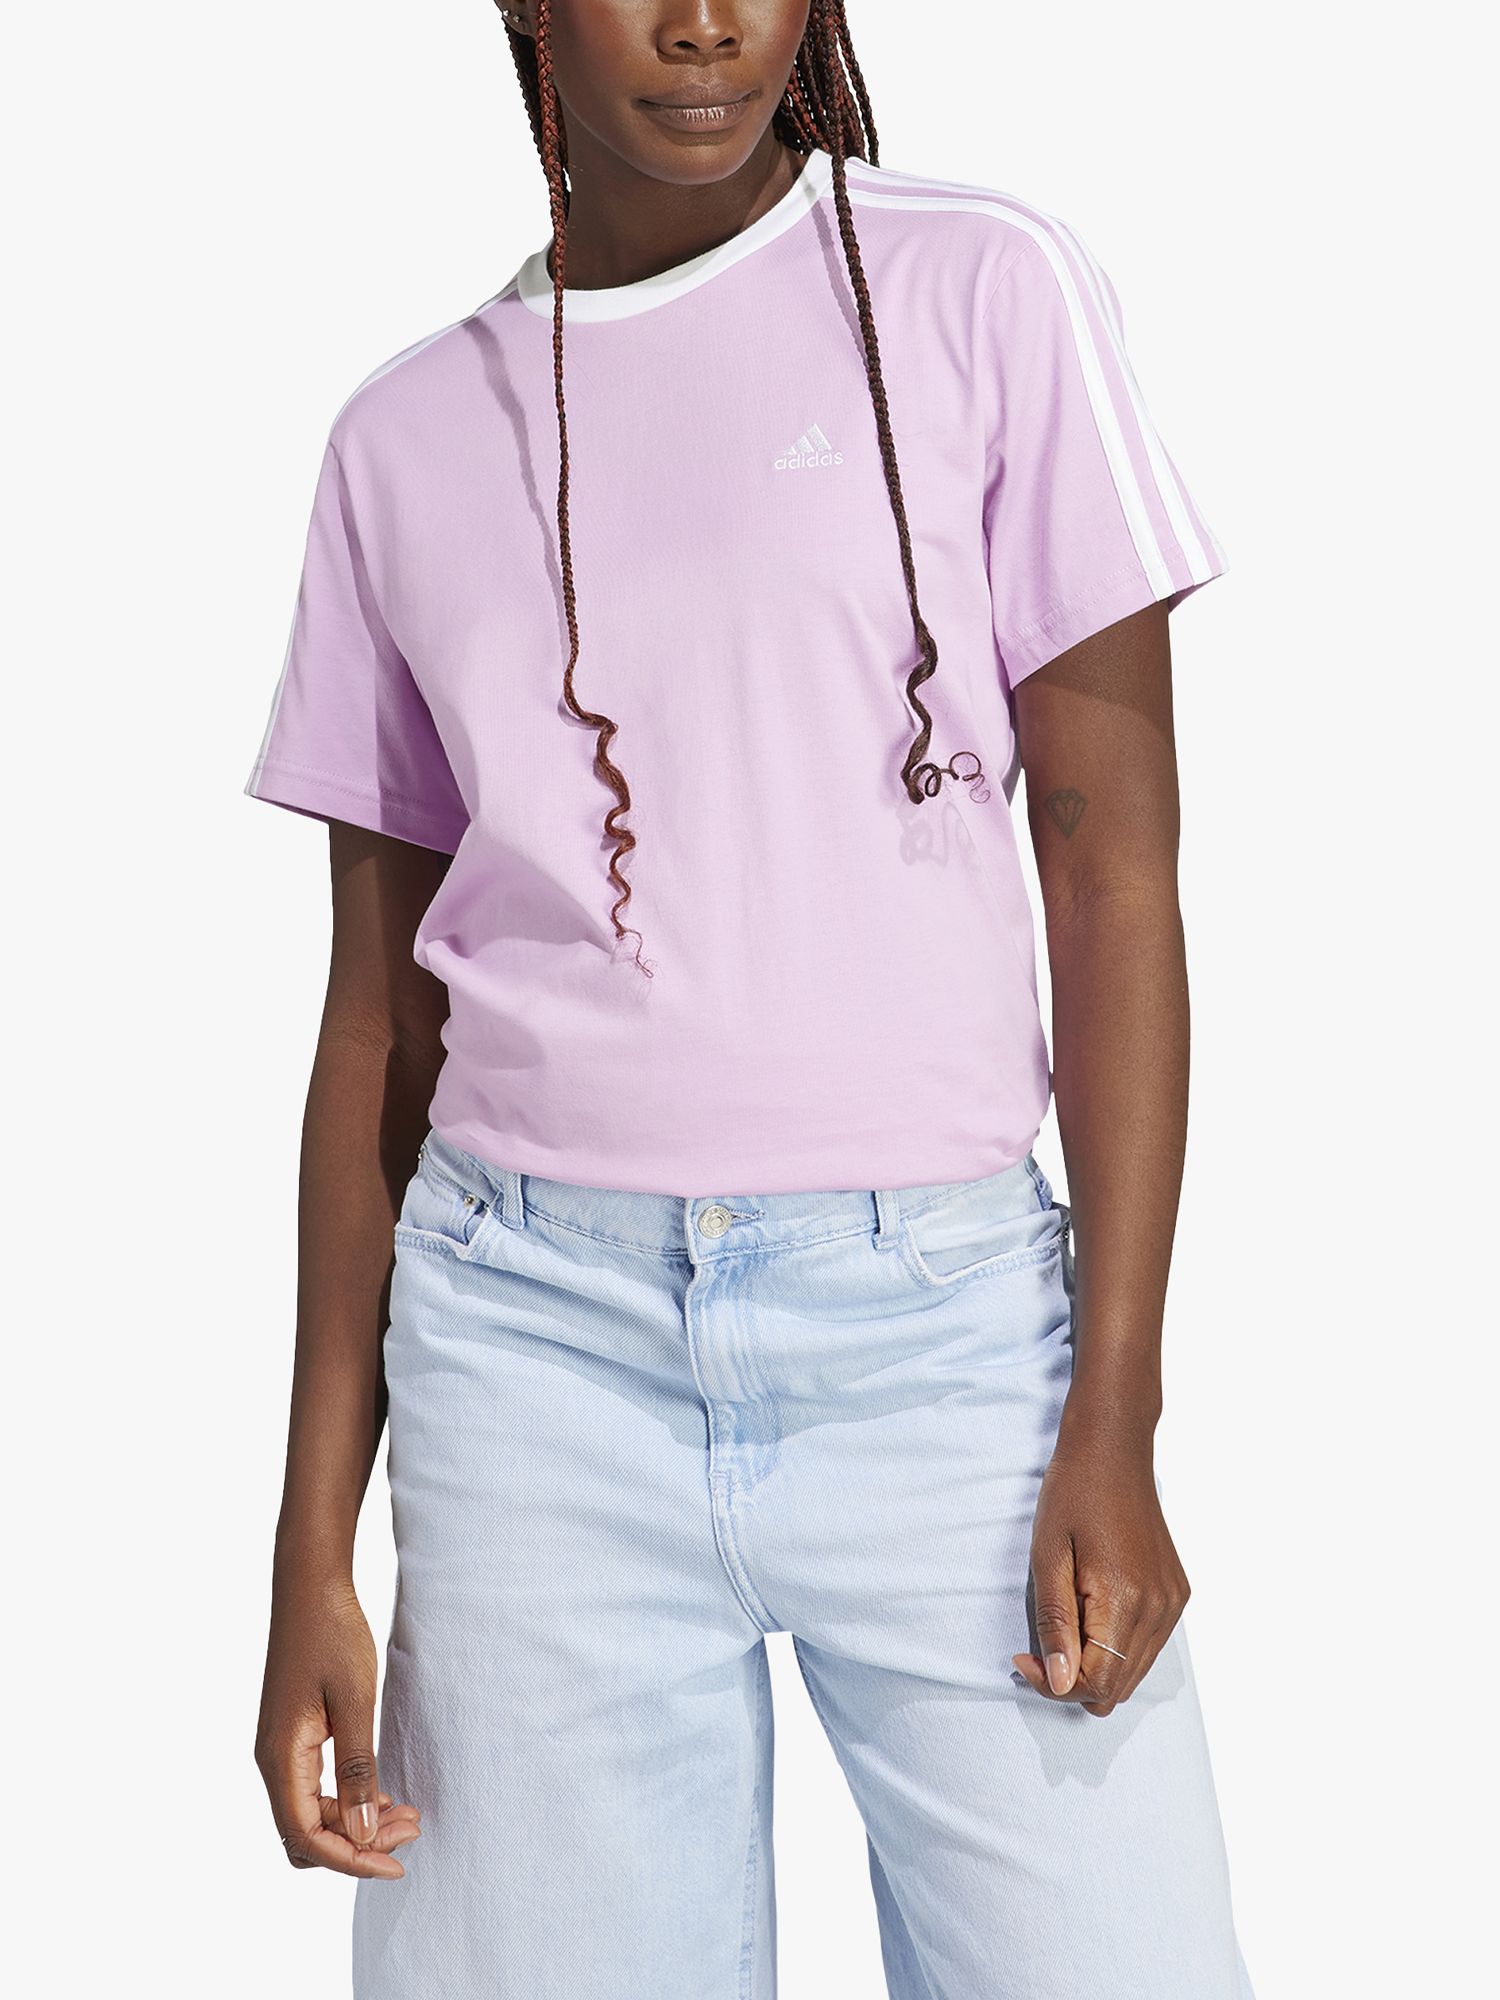 adidas 3-Stripes Polo Shirt (Plus Size) - Purple, Women's Golf, adidas US